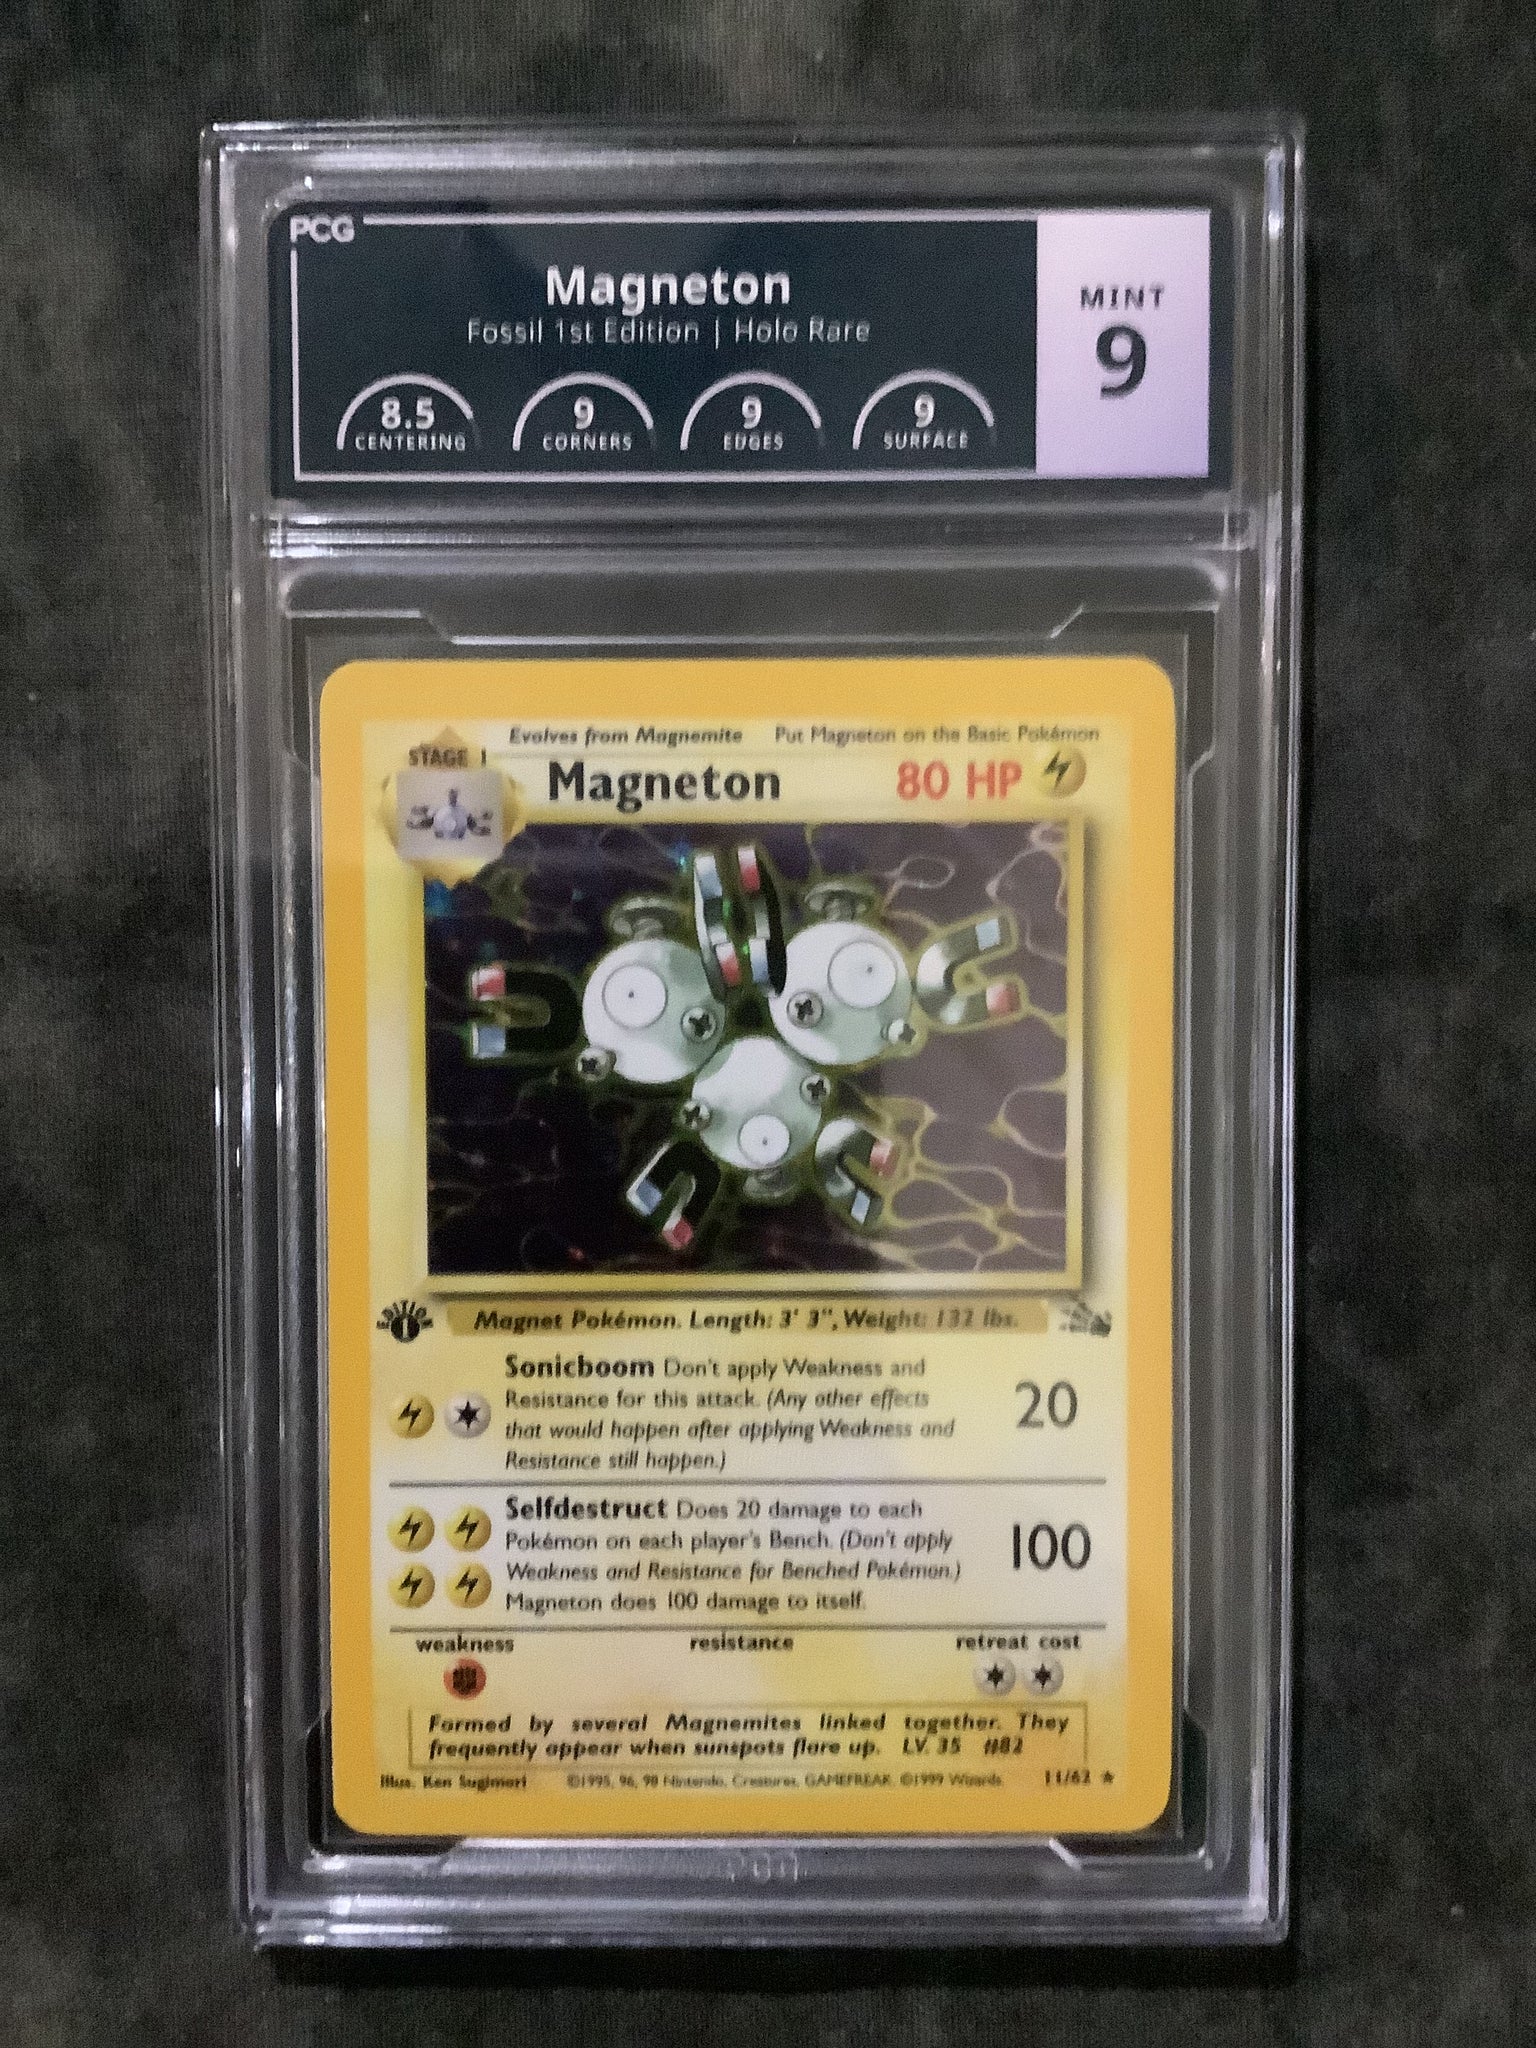 Magneton PCG 9 9653